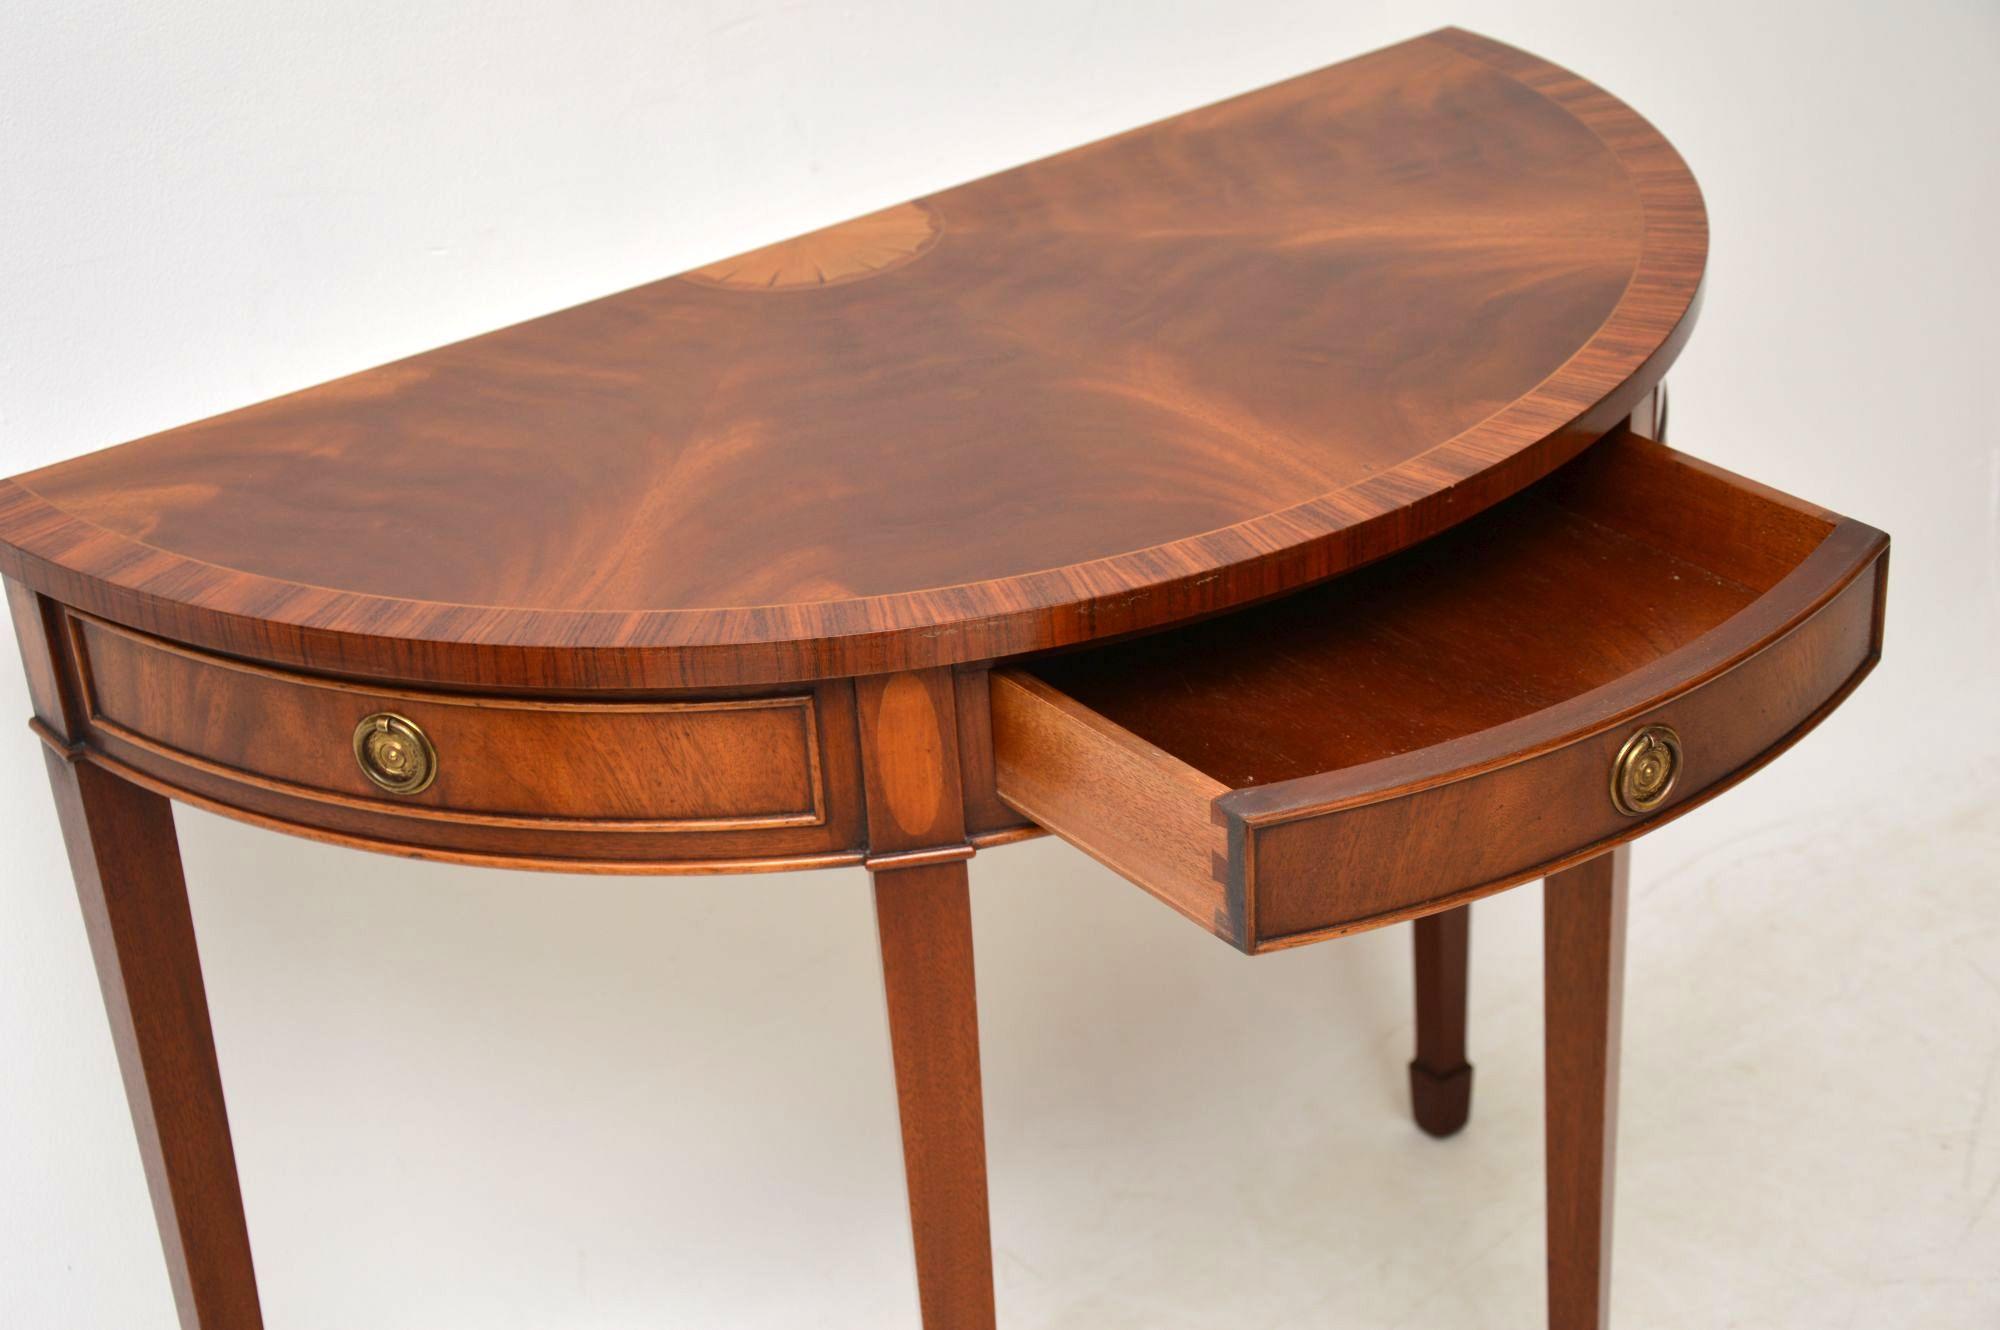 English Antique Sheraton Style Inlaid Mahogany Console Table